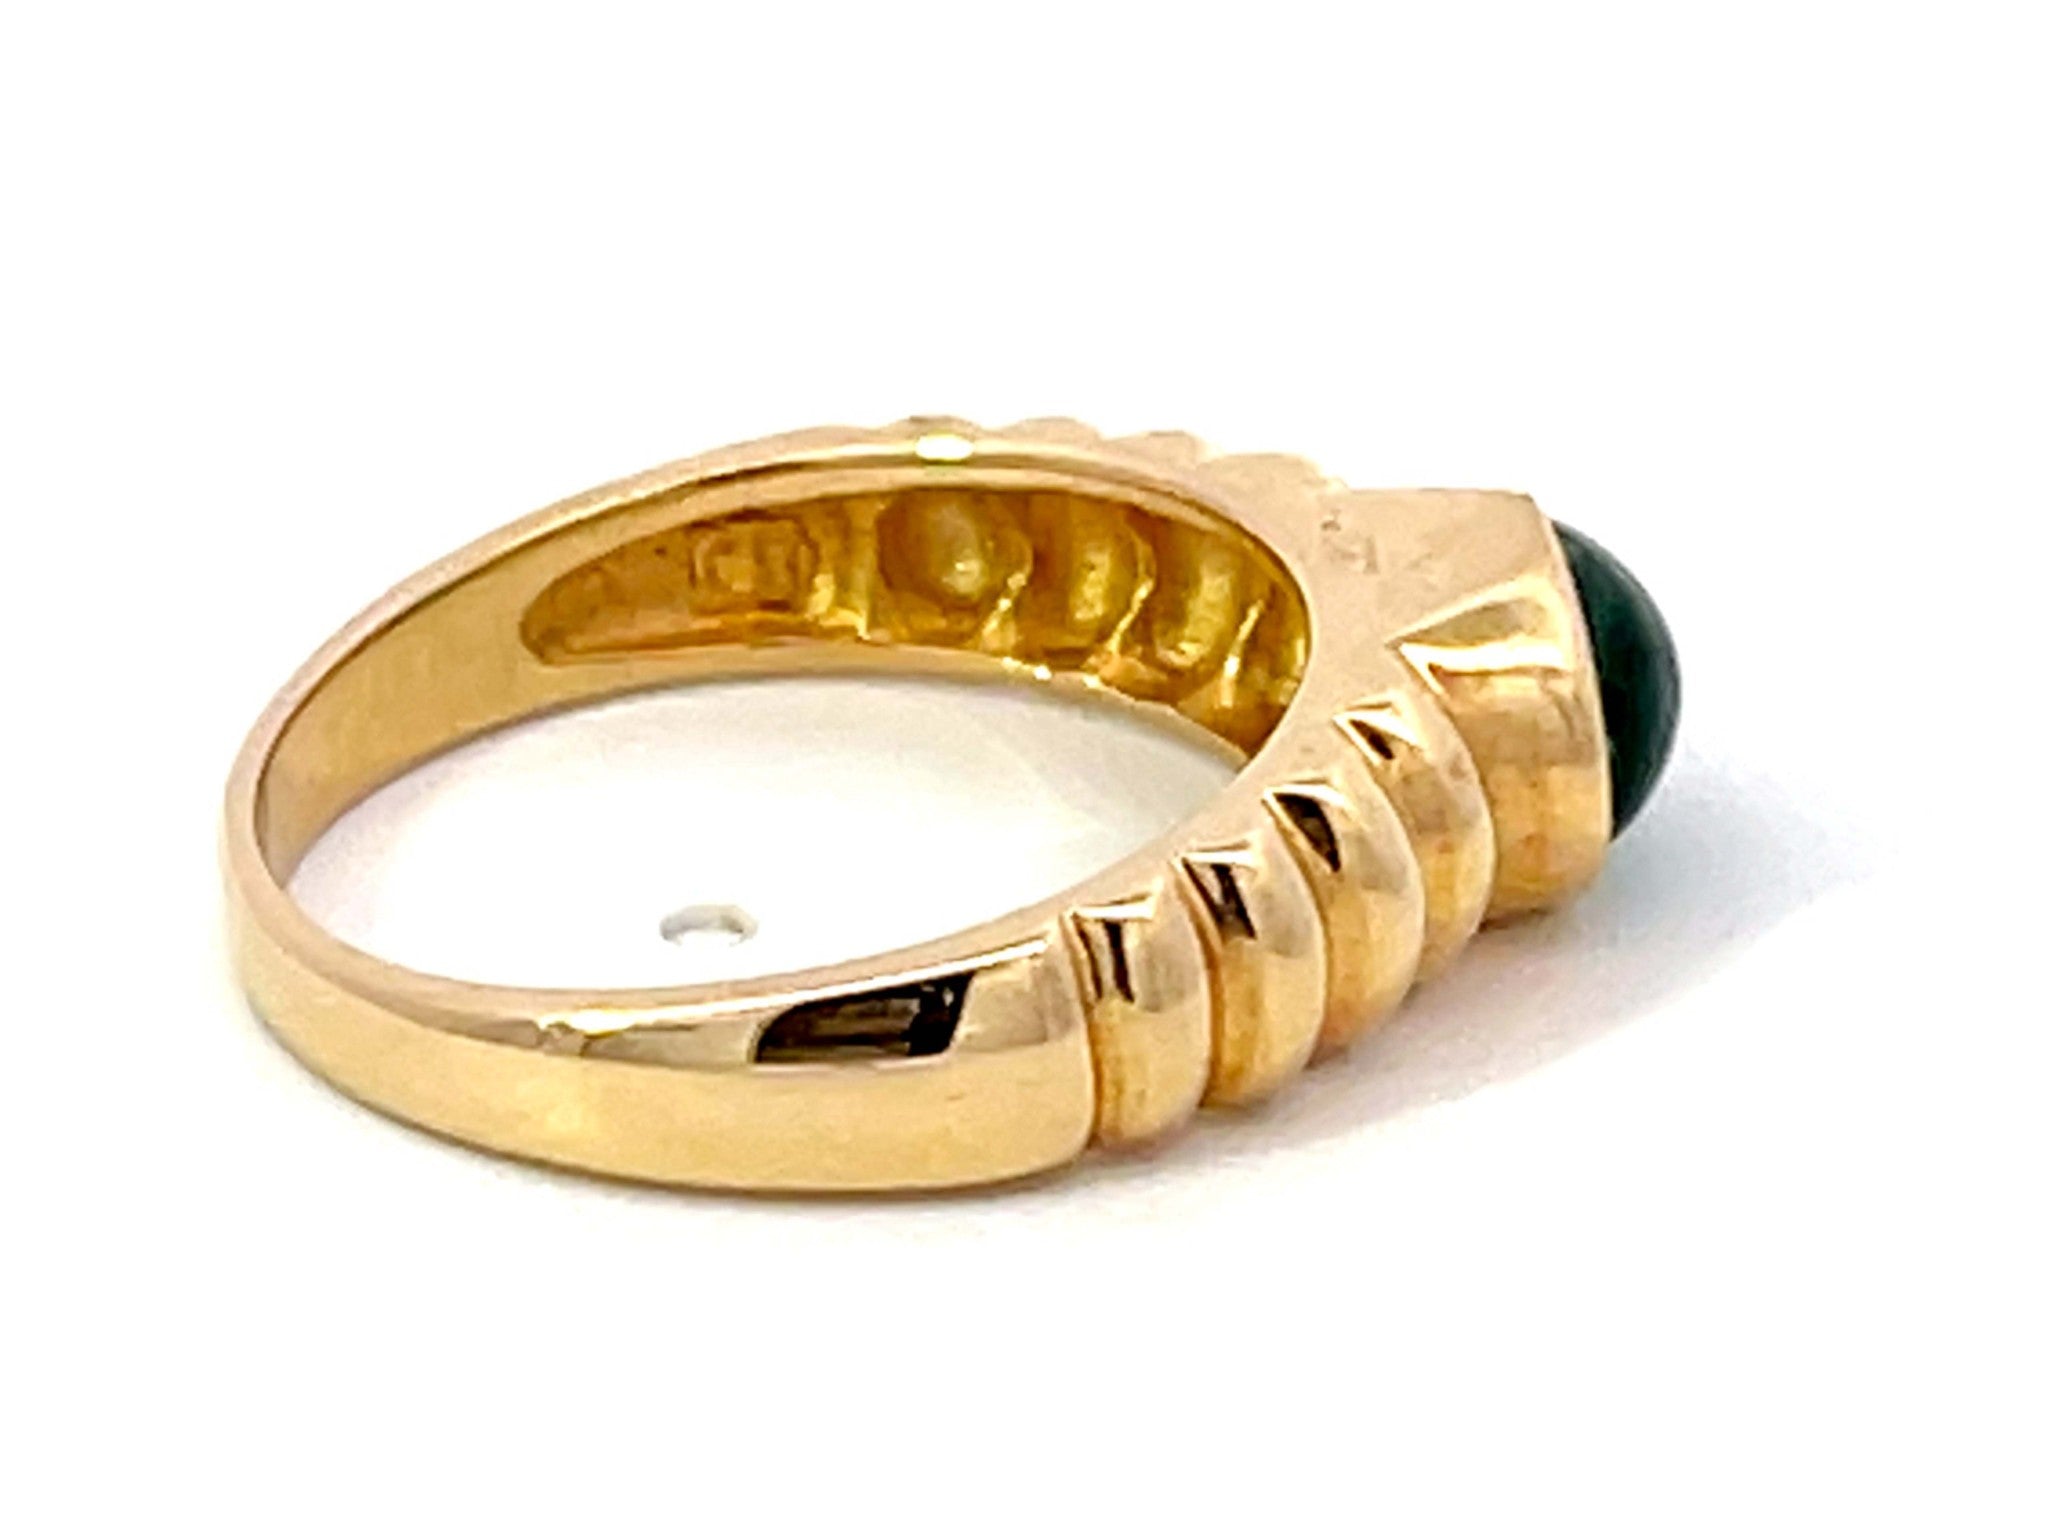 Oval Cabochon Green Emerald Ribbed Band Ring 14k Yellow Gold